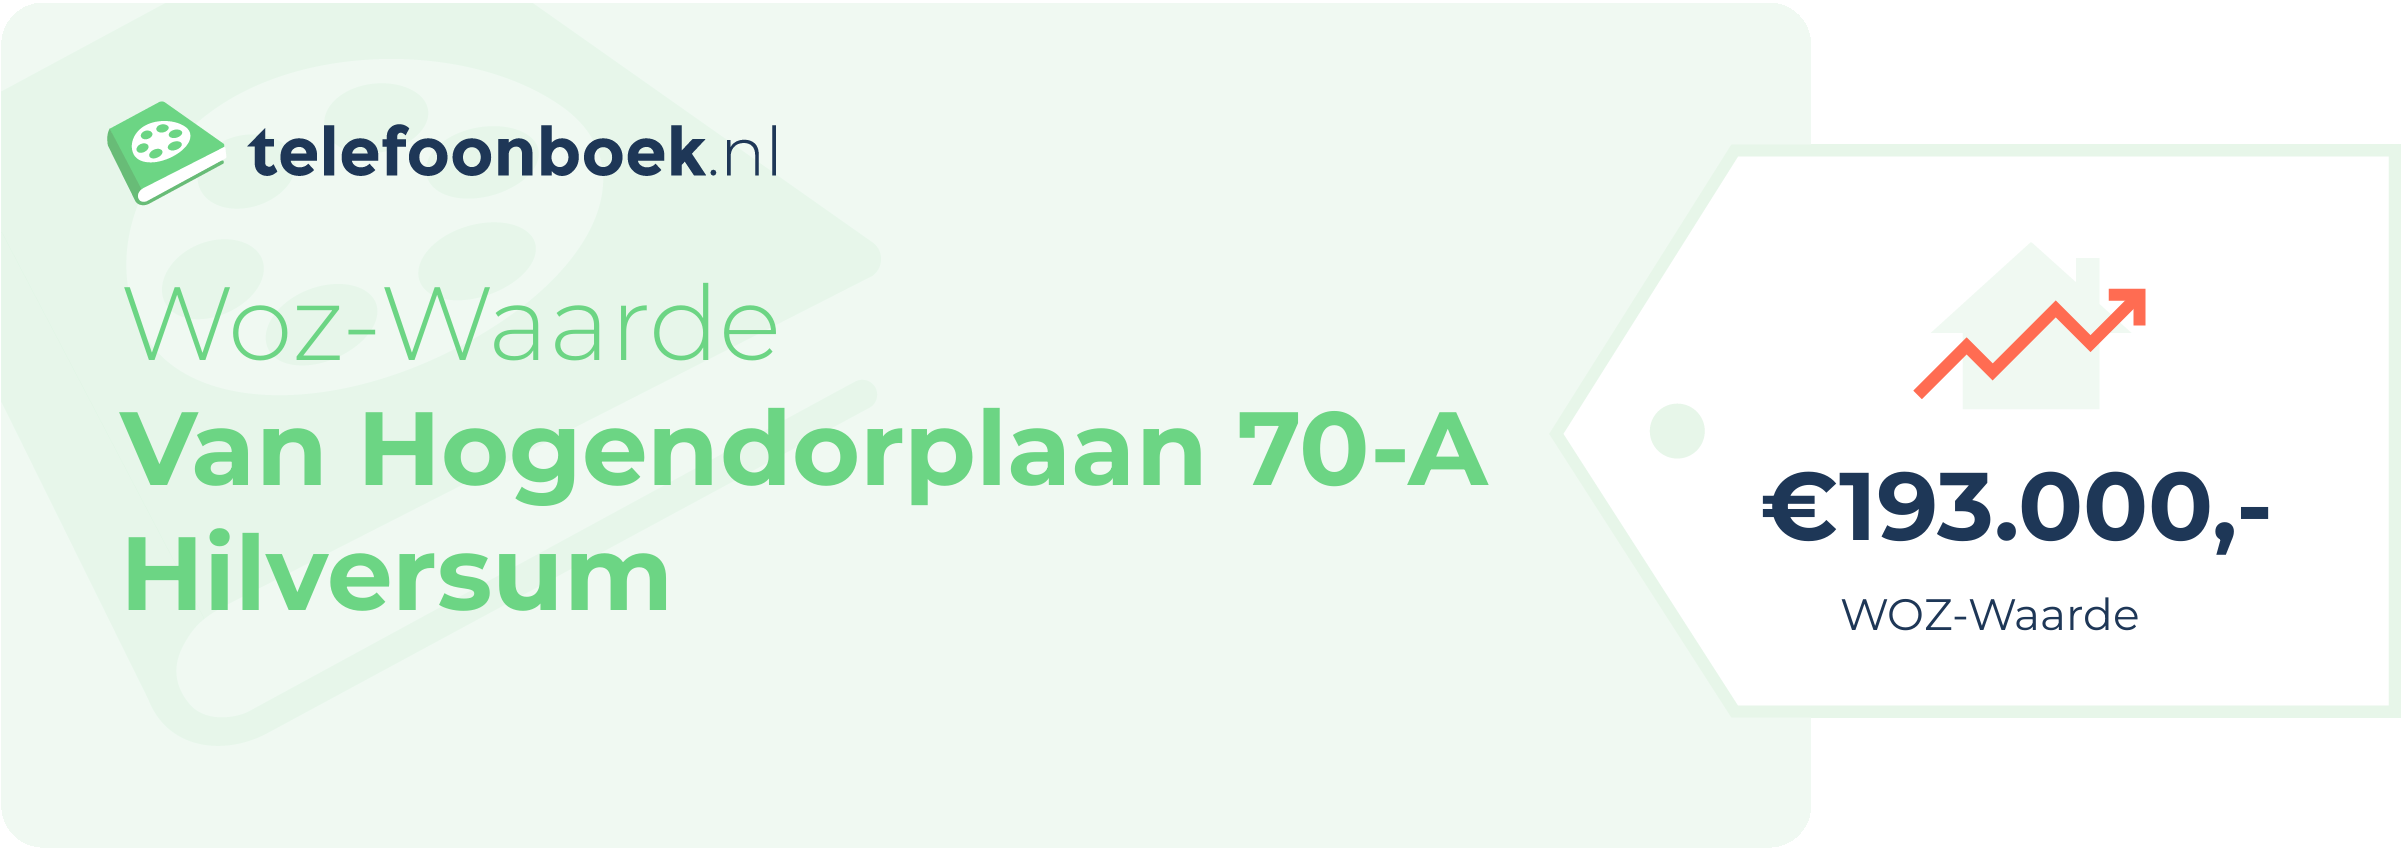 WOZ-waarde Van Hogendorplaan 70-A Hilversum